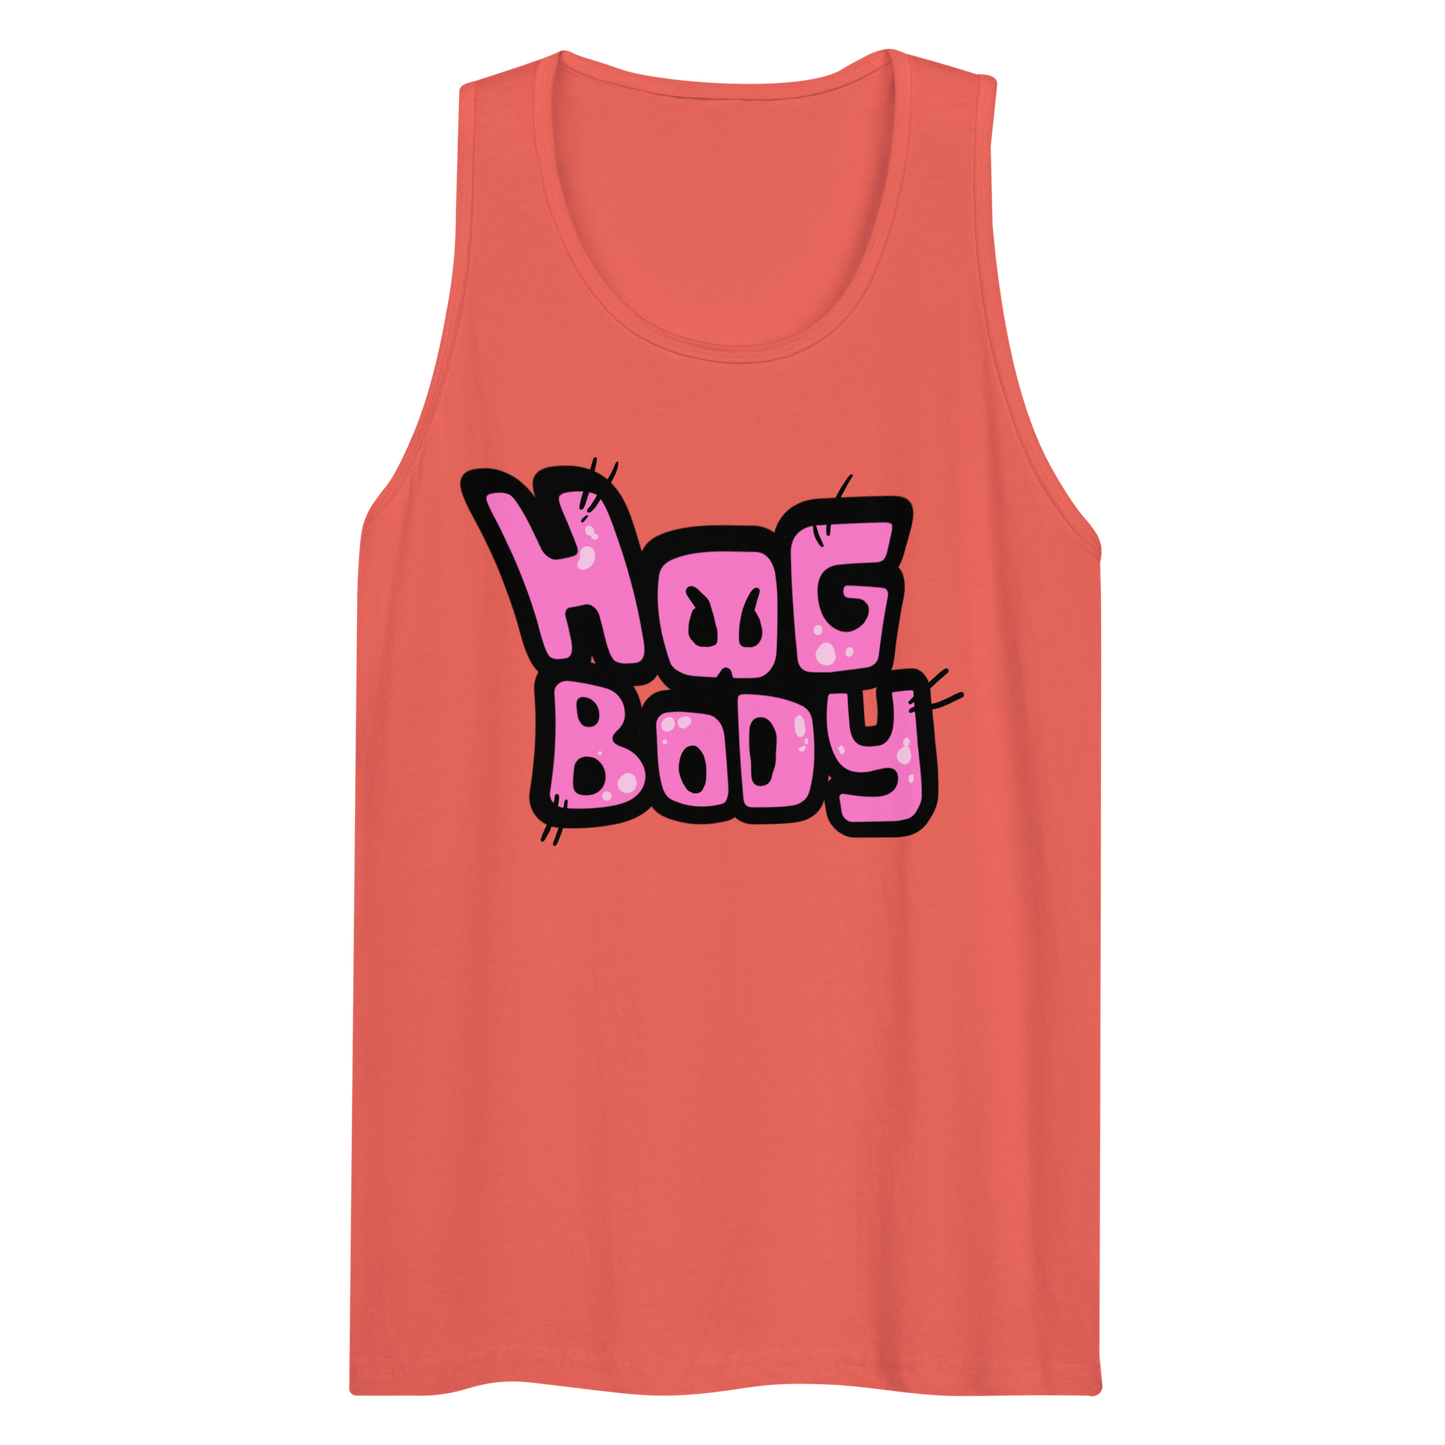 Hog Body Tank